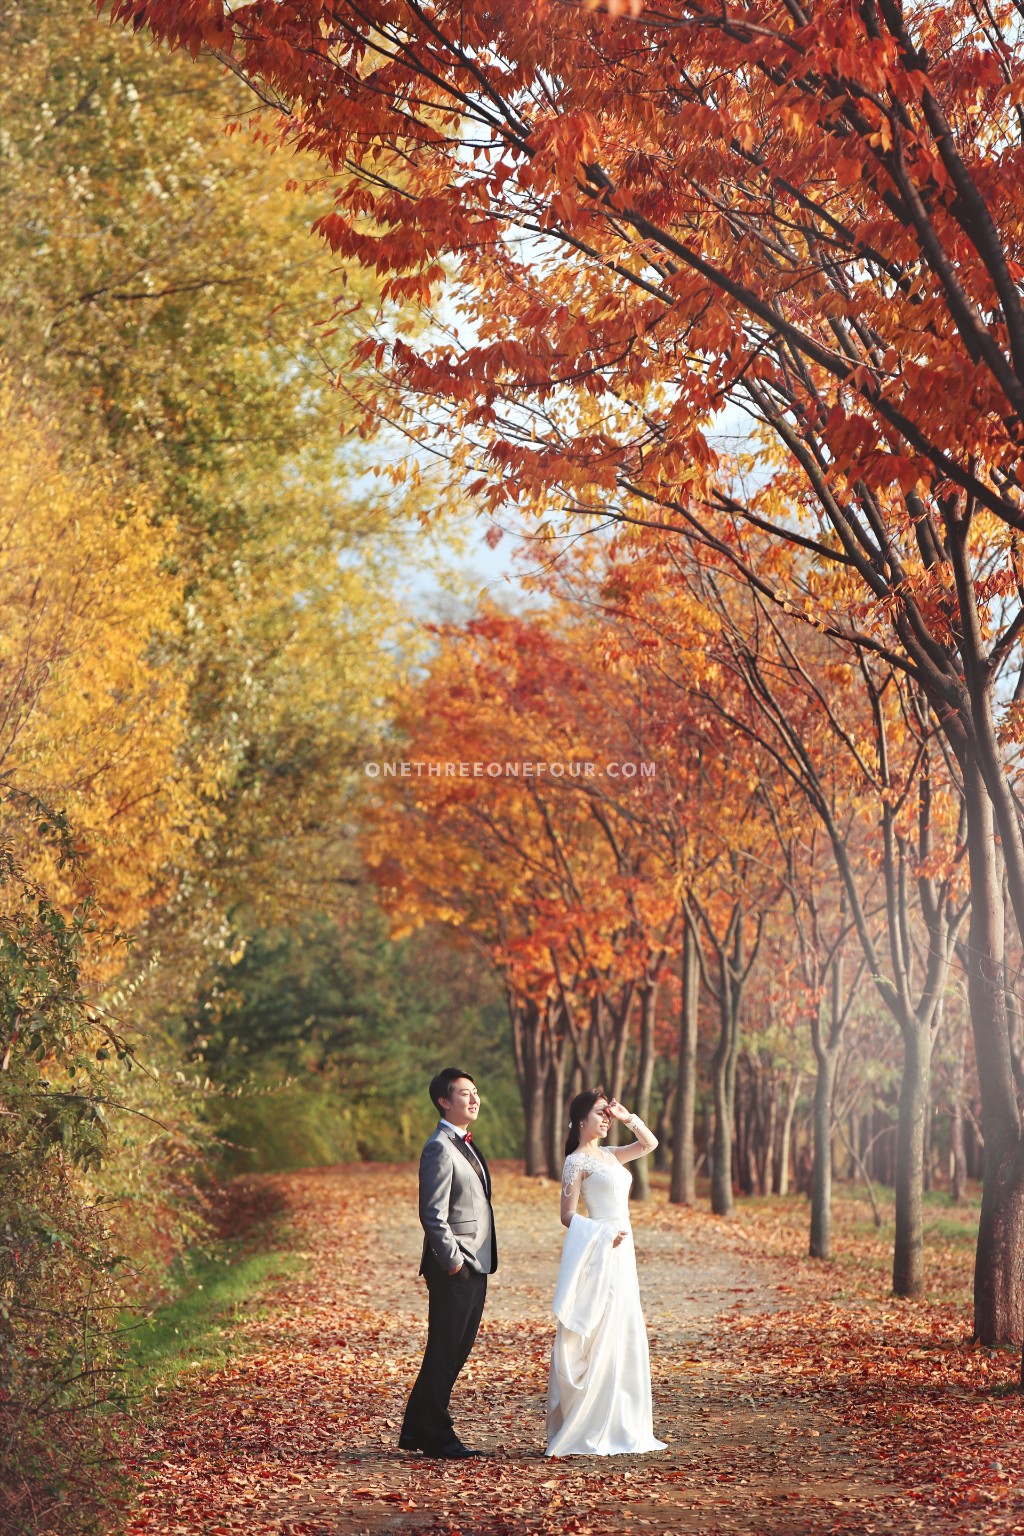 Studio Bong Korea Autumn Outdoor Pre-Wedding Photography - Past Clients by Bong Studio on OneThreeOneFour 10